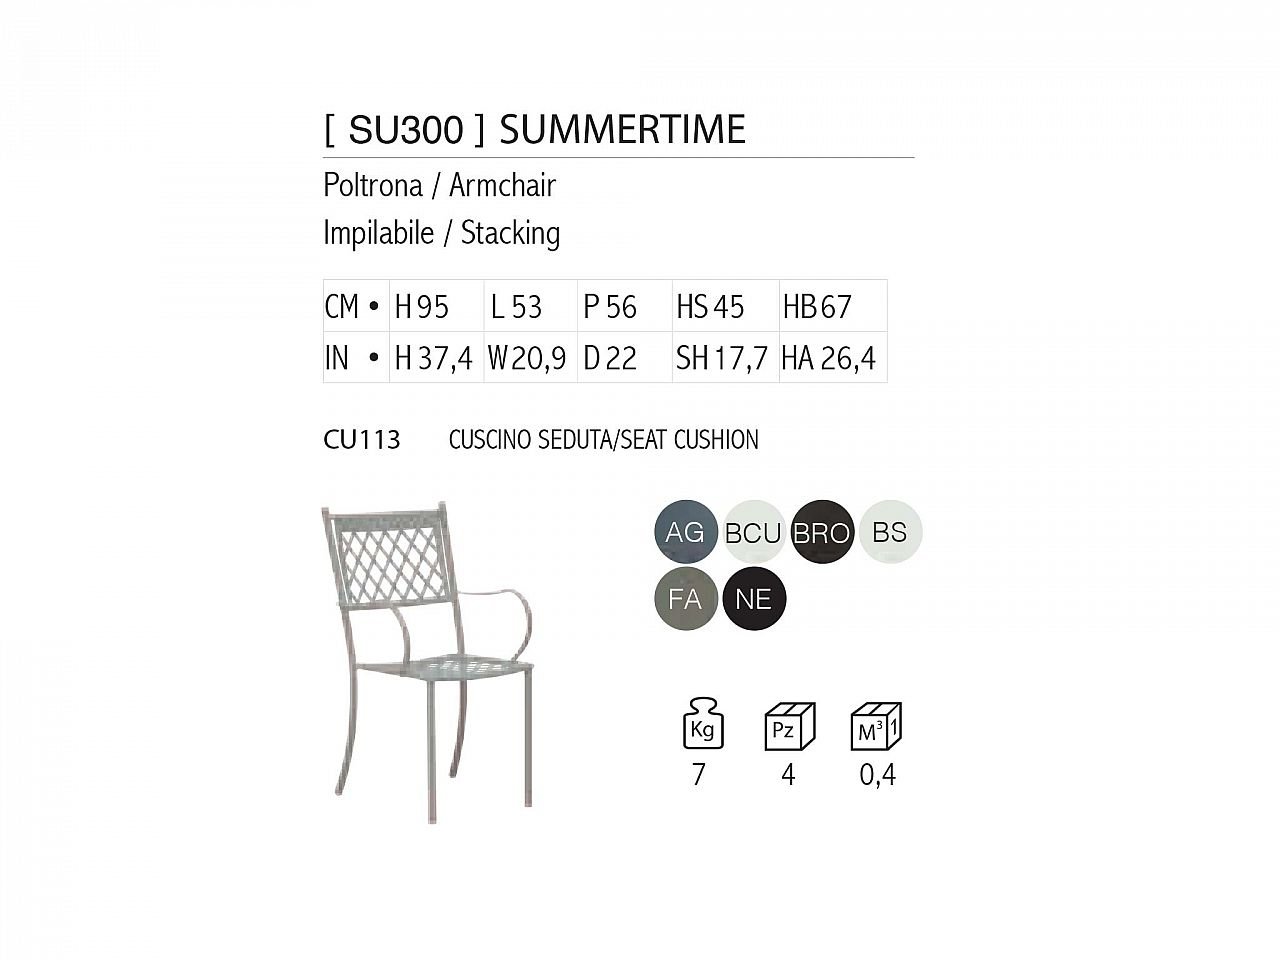 Poltrona Summertime - 1